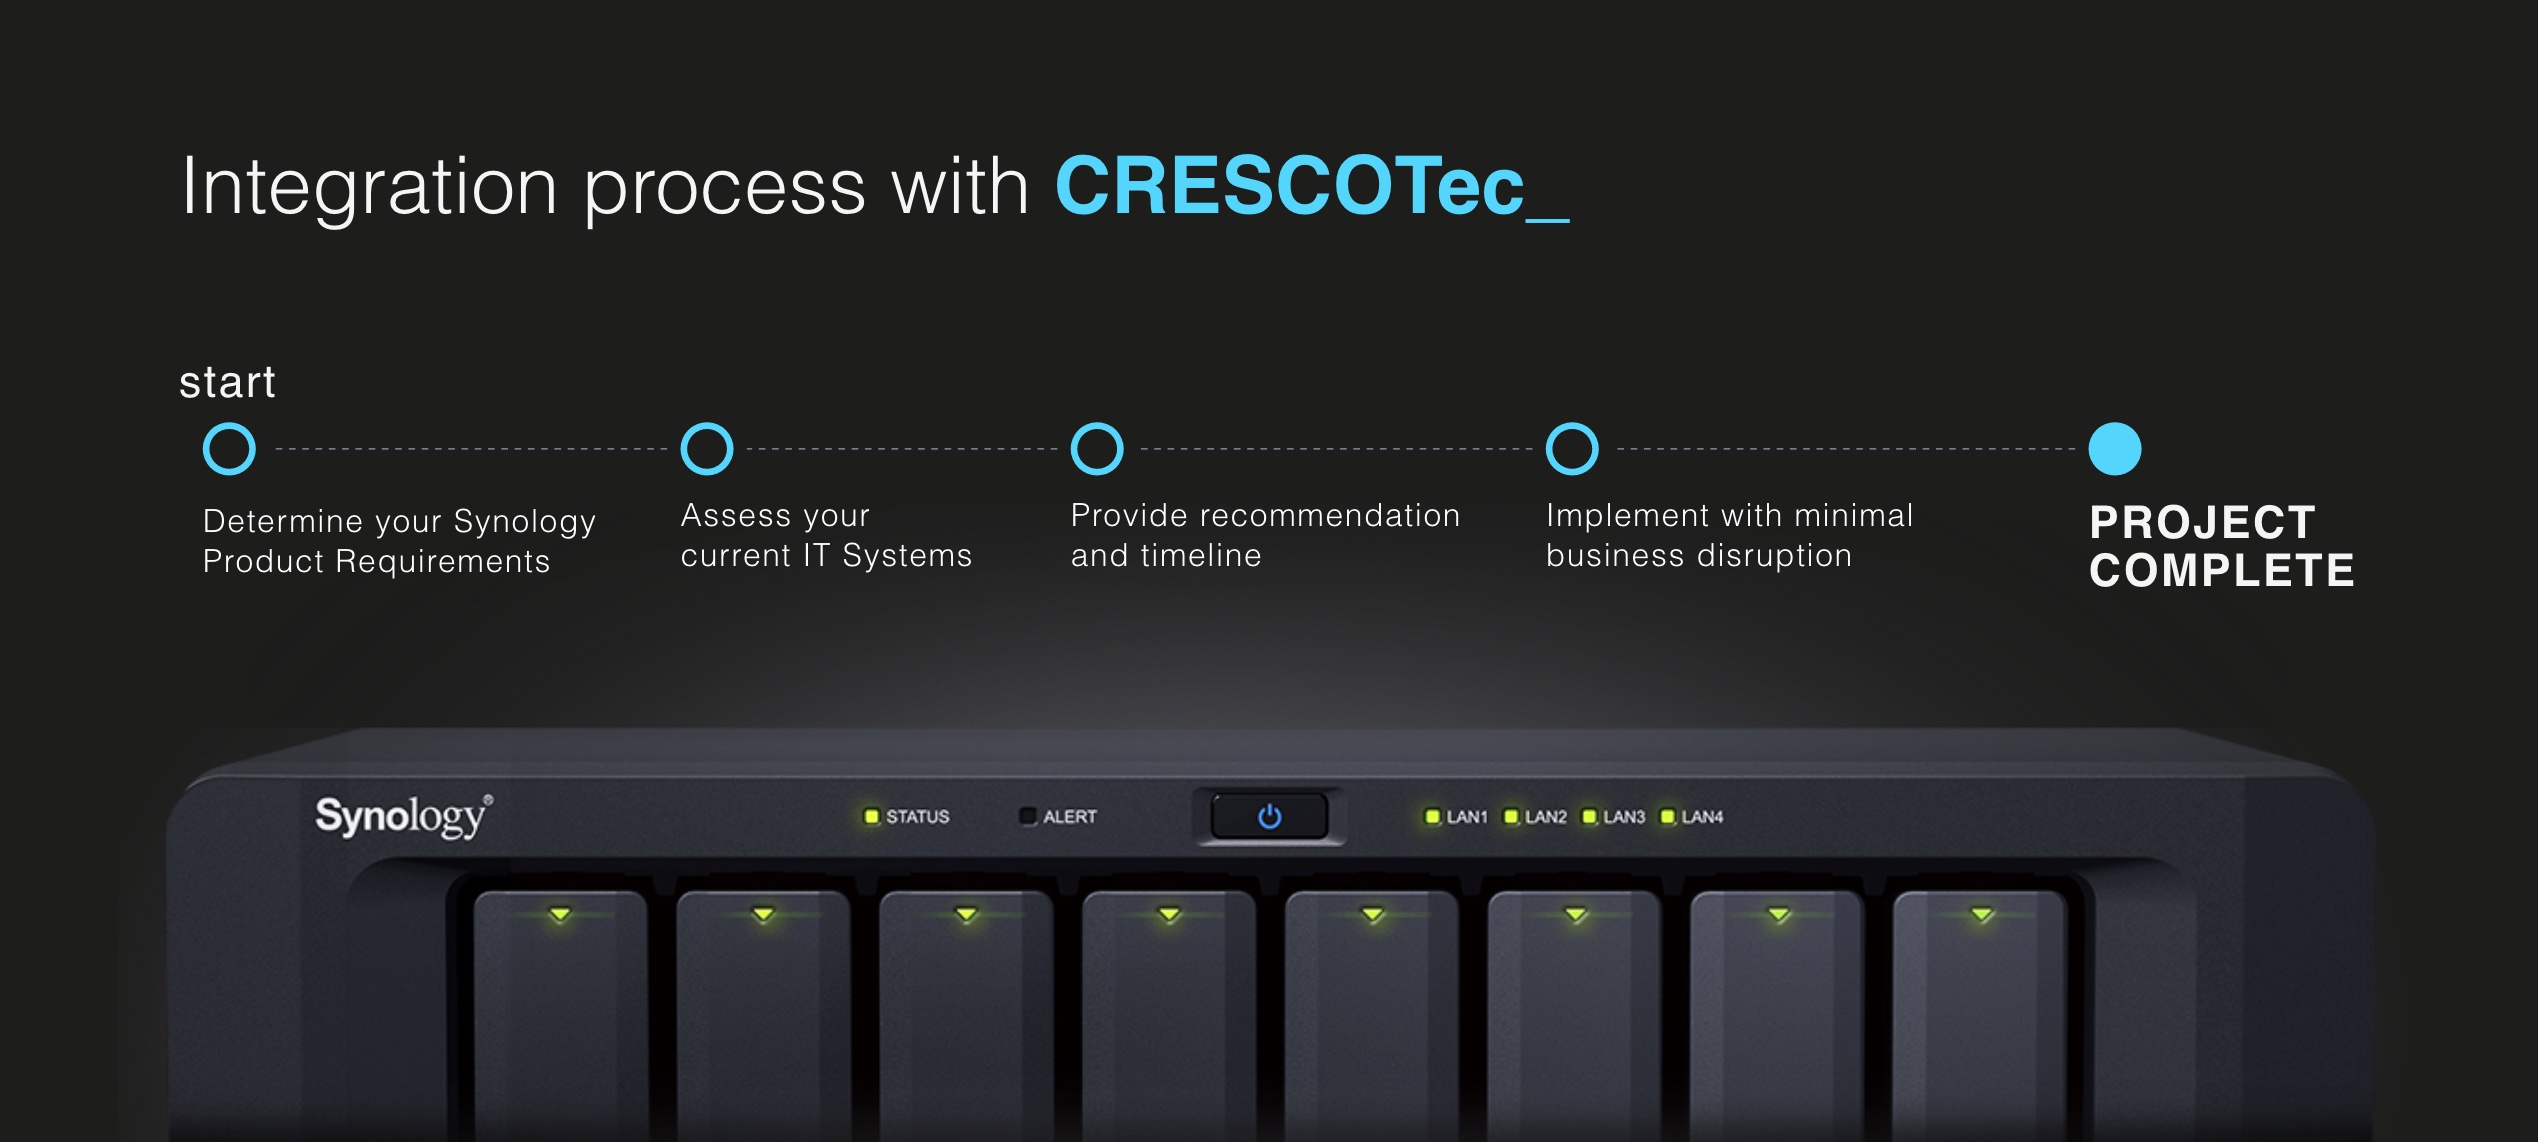 Synology integration process with CRESCOtec